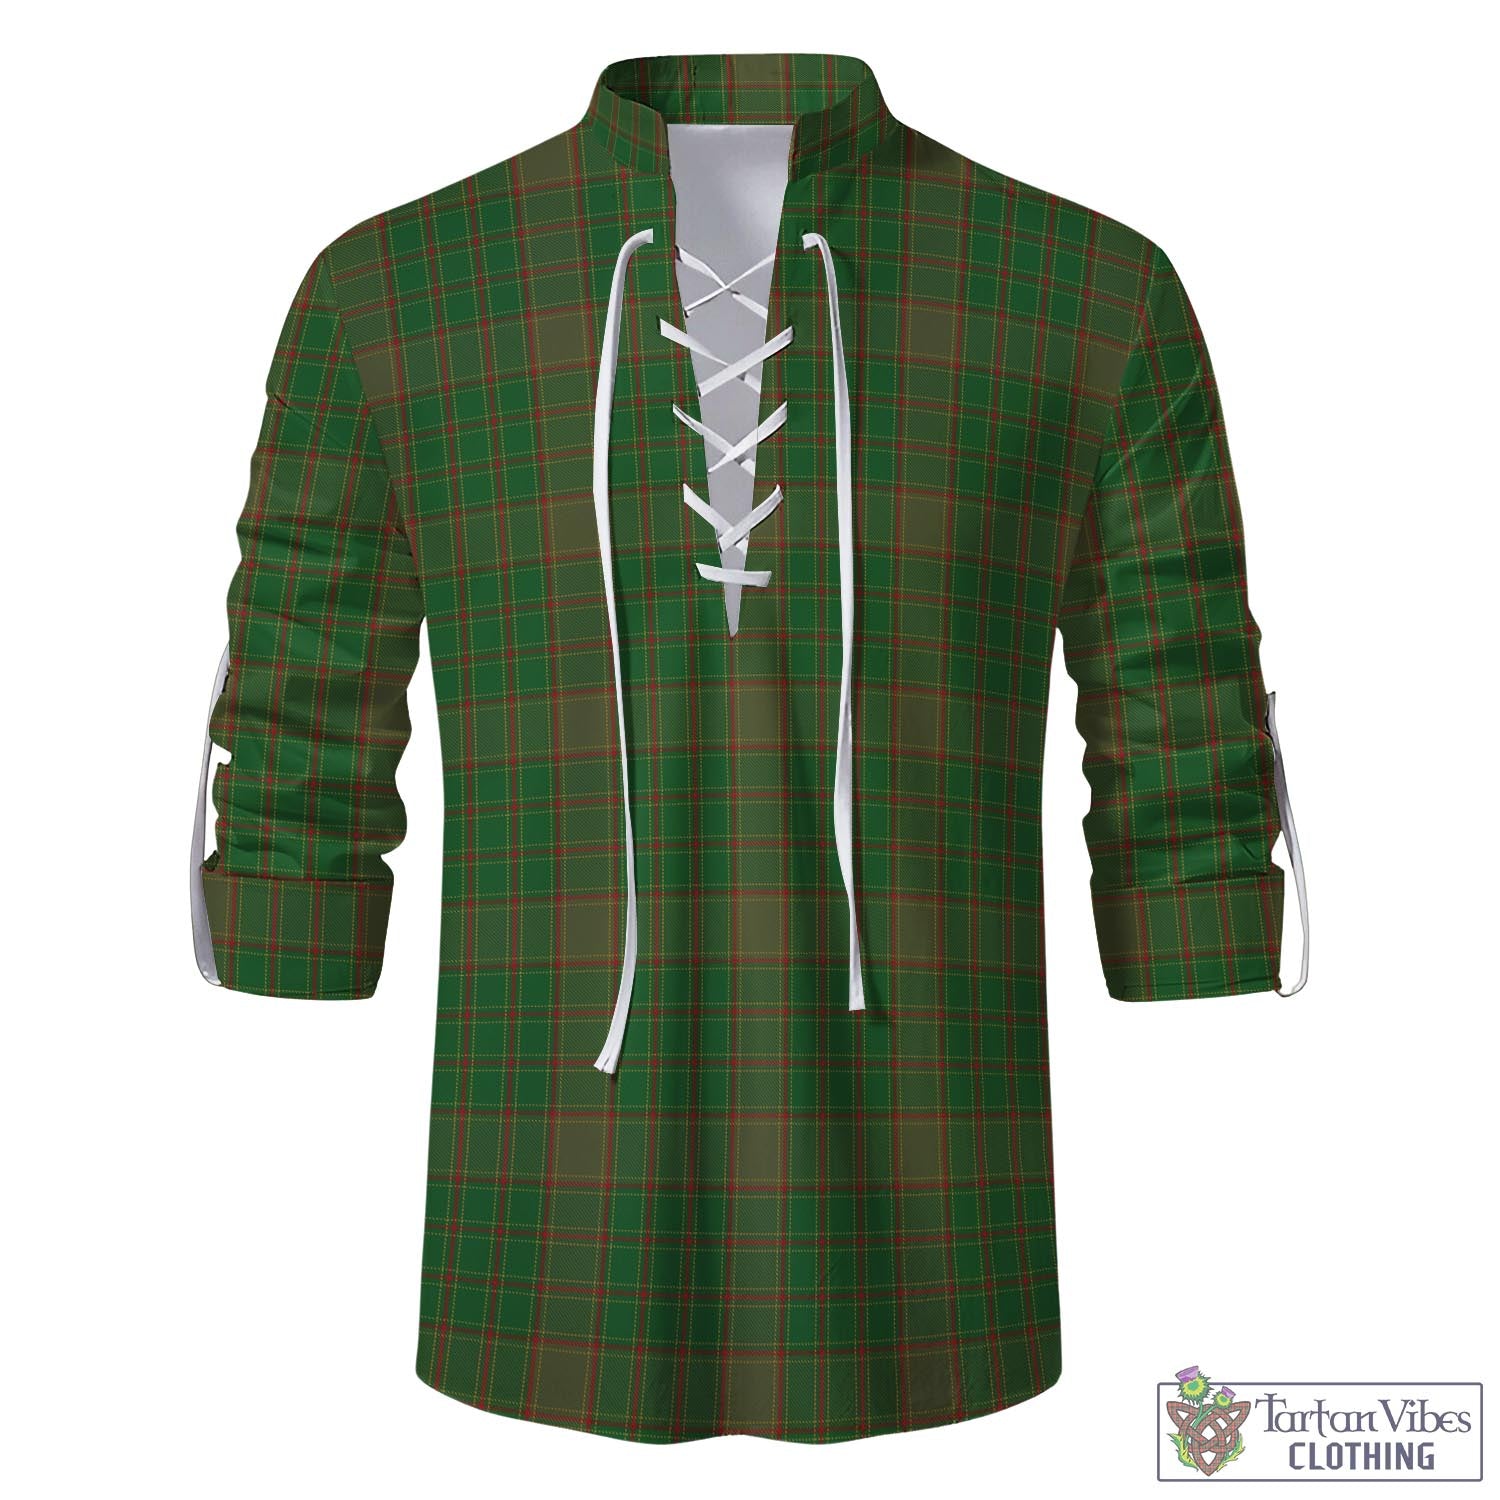 Tartan Vibes Clothing Terry Tartan Men's Scottish Traditional Jacobite Ghillie Kilt Shirt